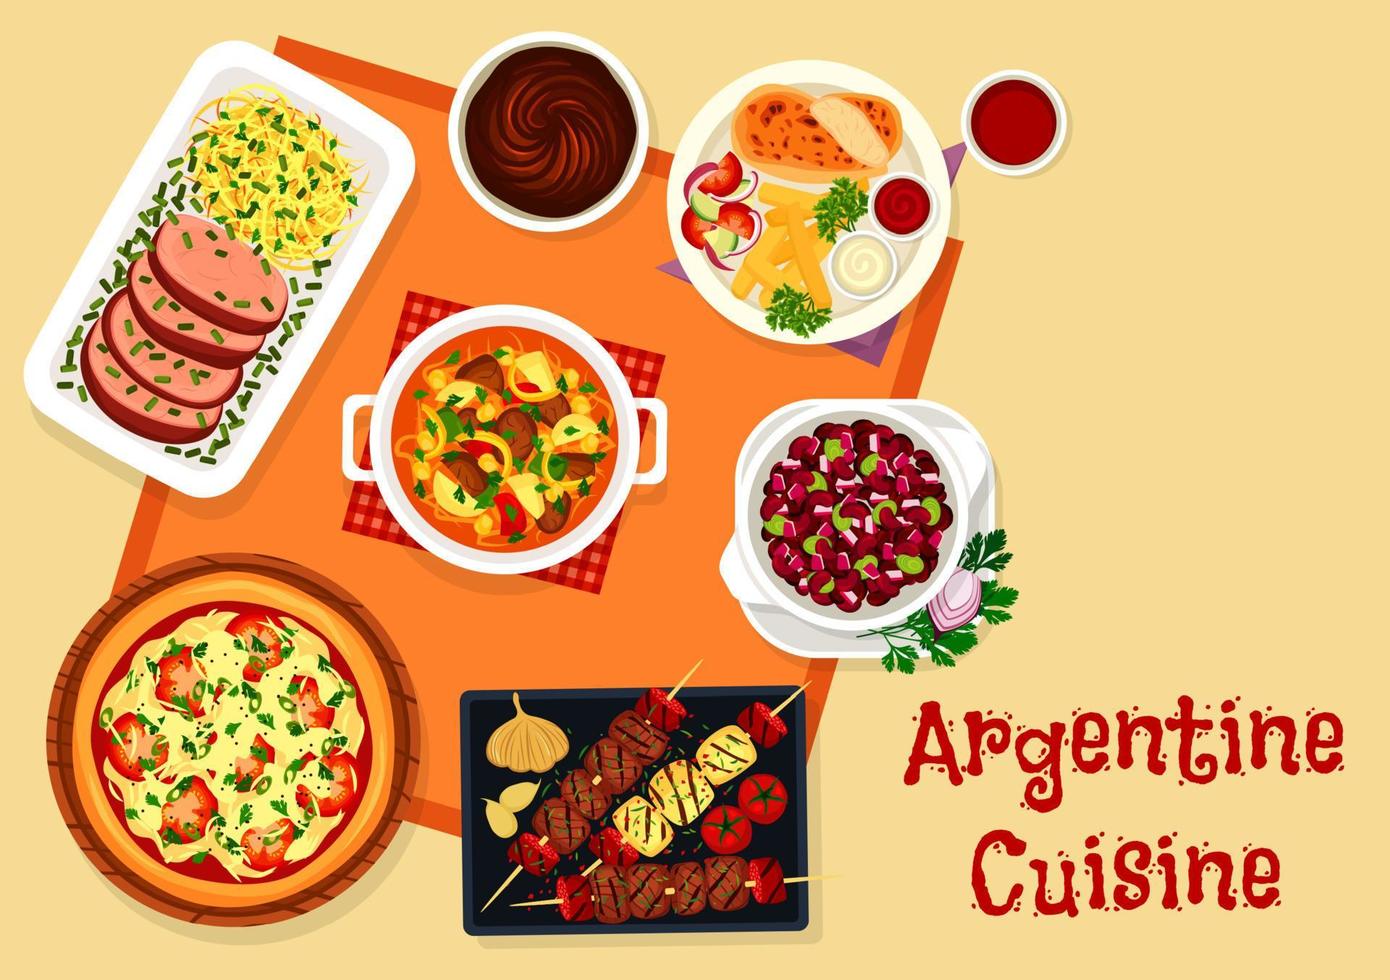 Argentine cuisine lunch menu with dessert icon vector